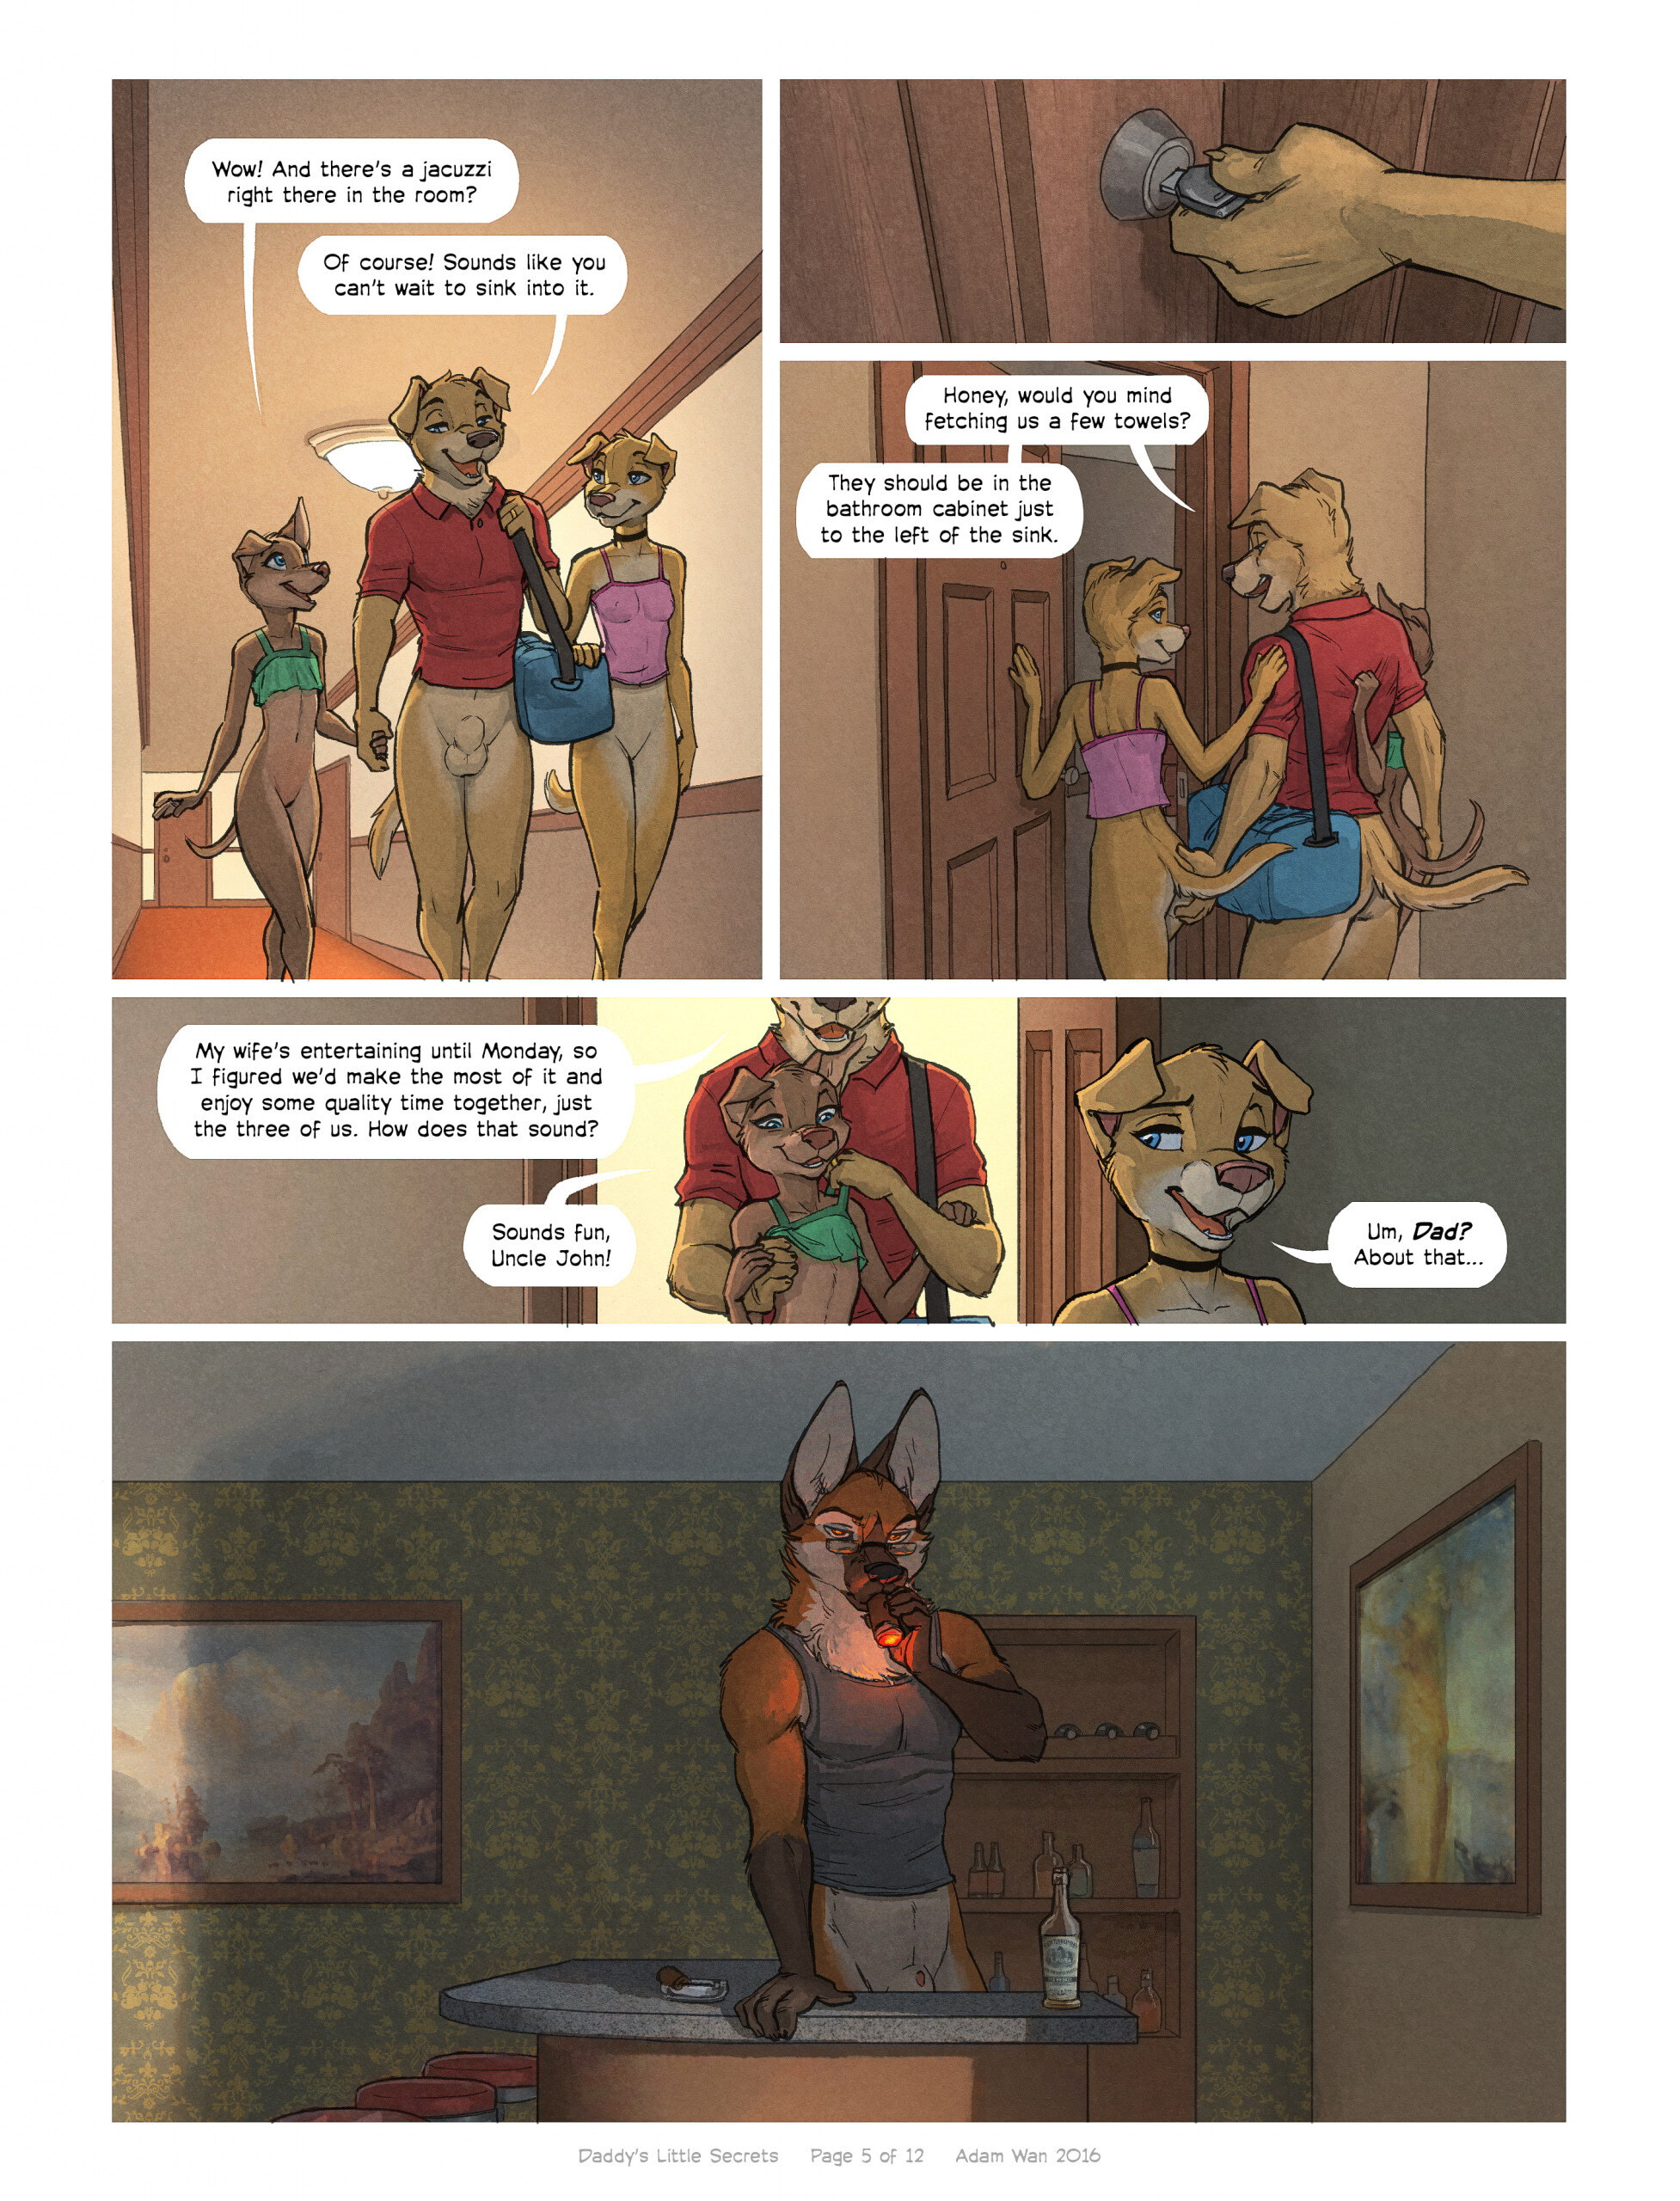 Daddy's Little Secrets - Page 7